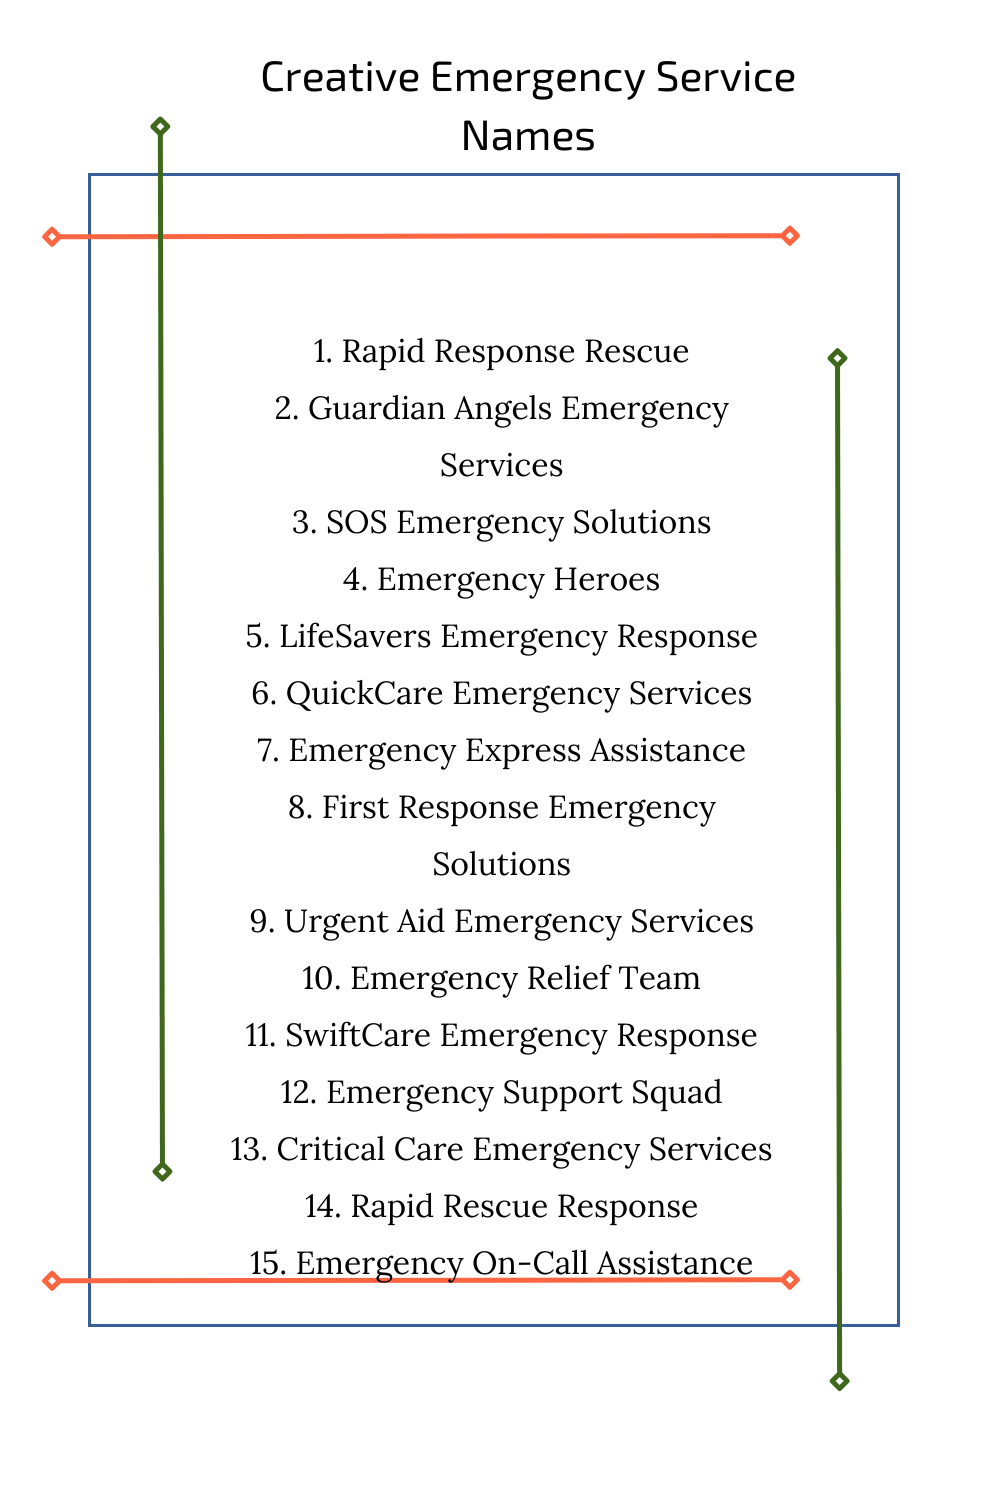 Creative Emergency Service Names